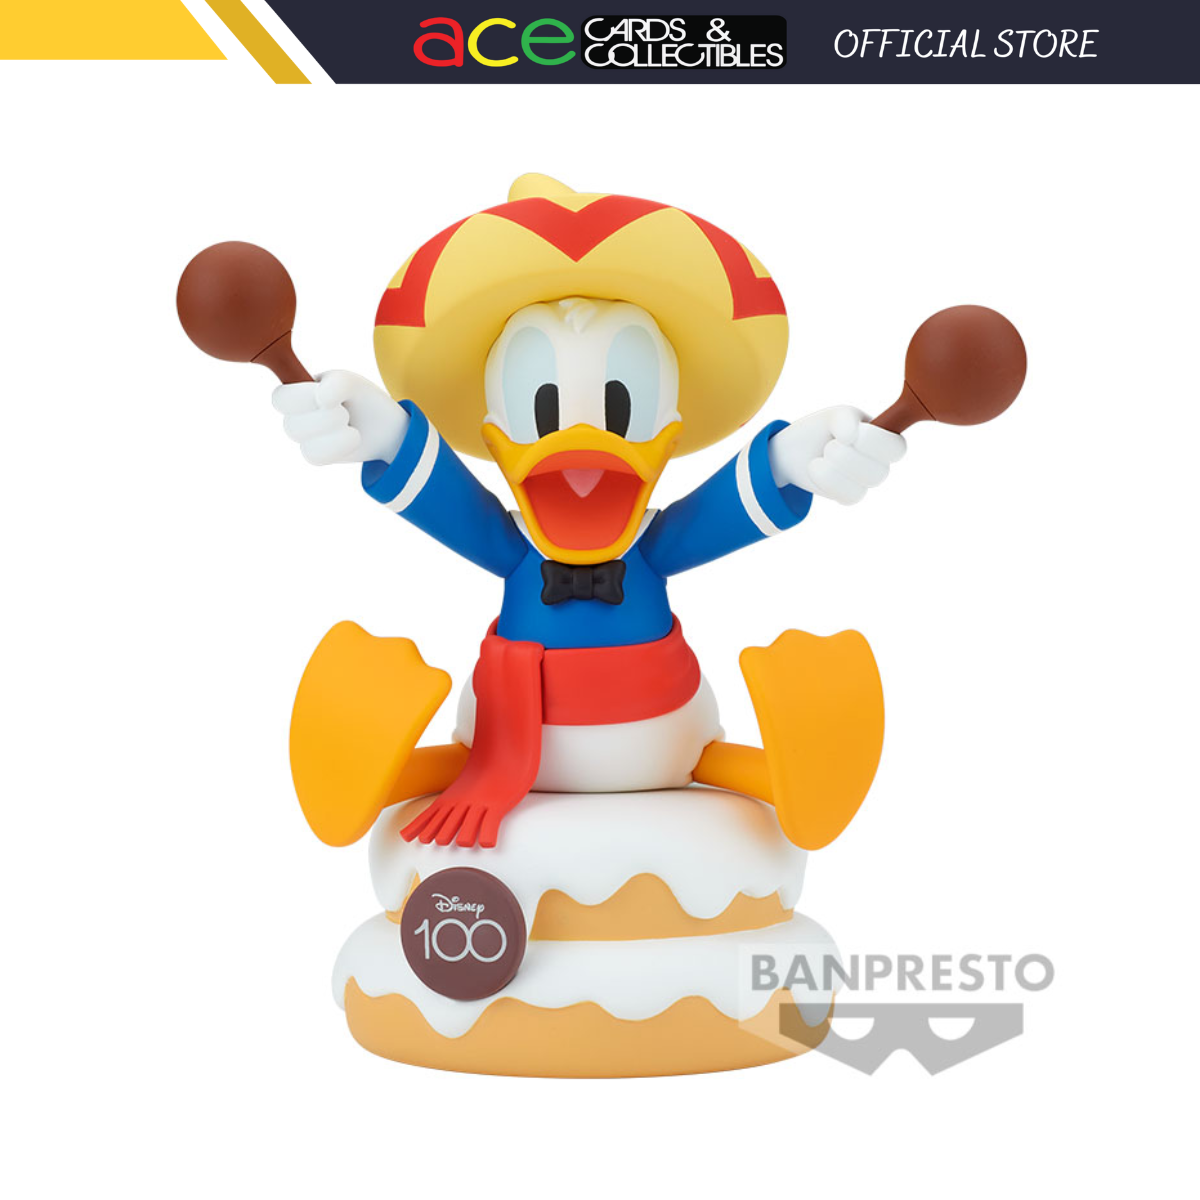 Disney Characters Sofubi Figure "Donald Duck" (Disney 100th Anniversary Ver.)-Banpresto-Ace Cards & Collectibles